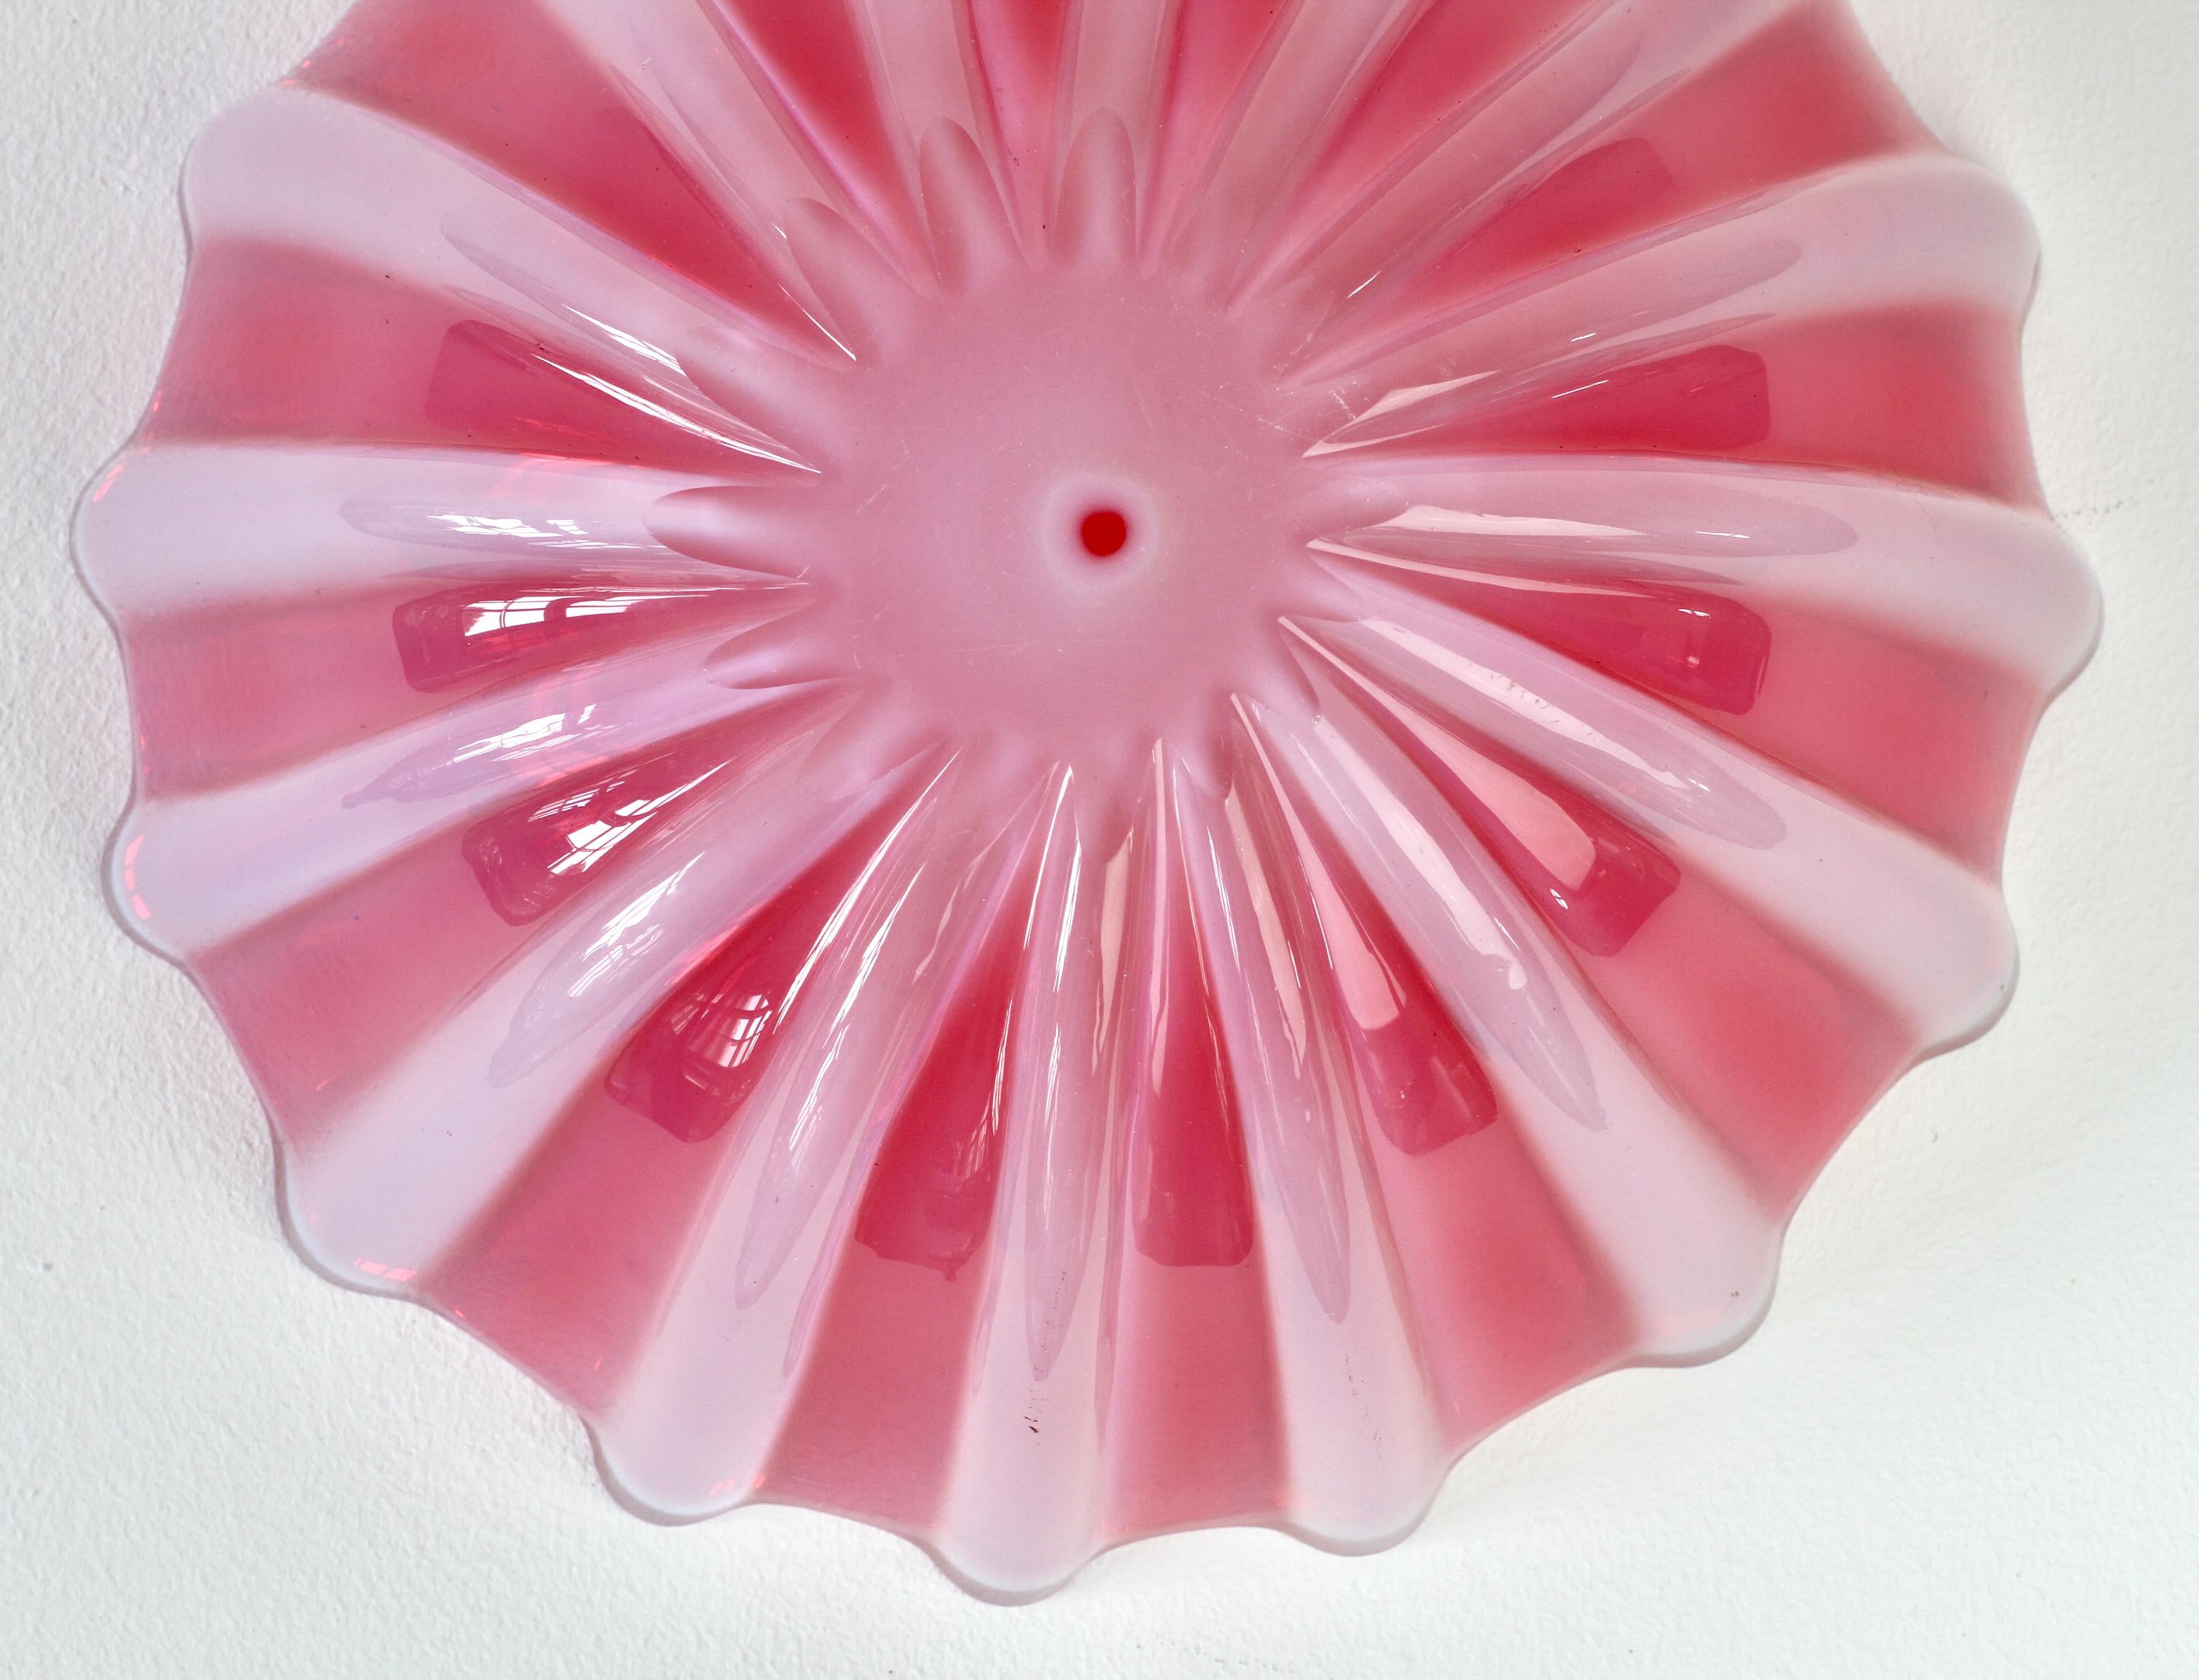 Seguso Vetri d'Arte Large Red, Pink Opaline Murano Glass Fruit Bowl circa 1980s For Sale 4